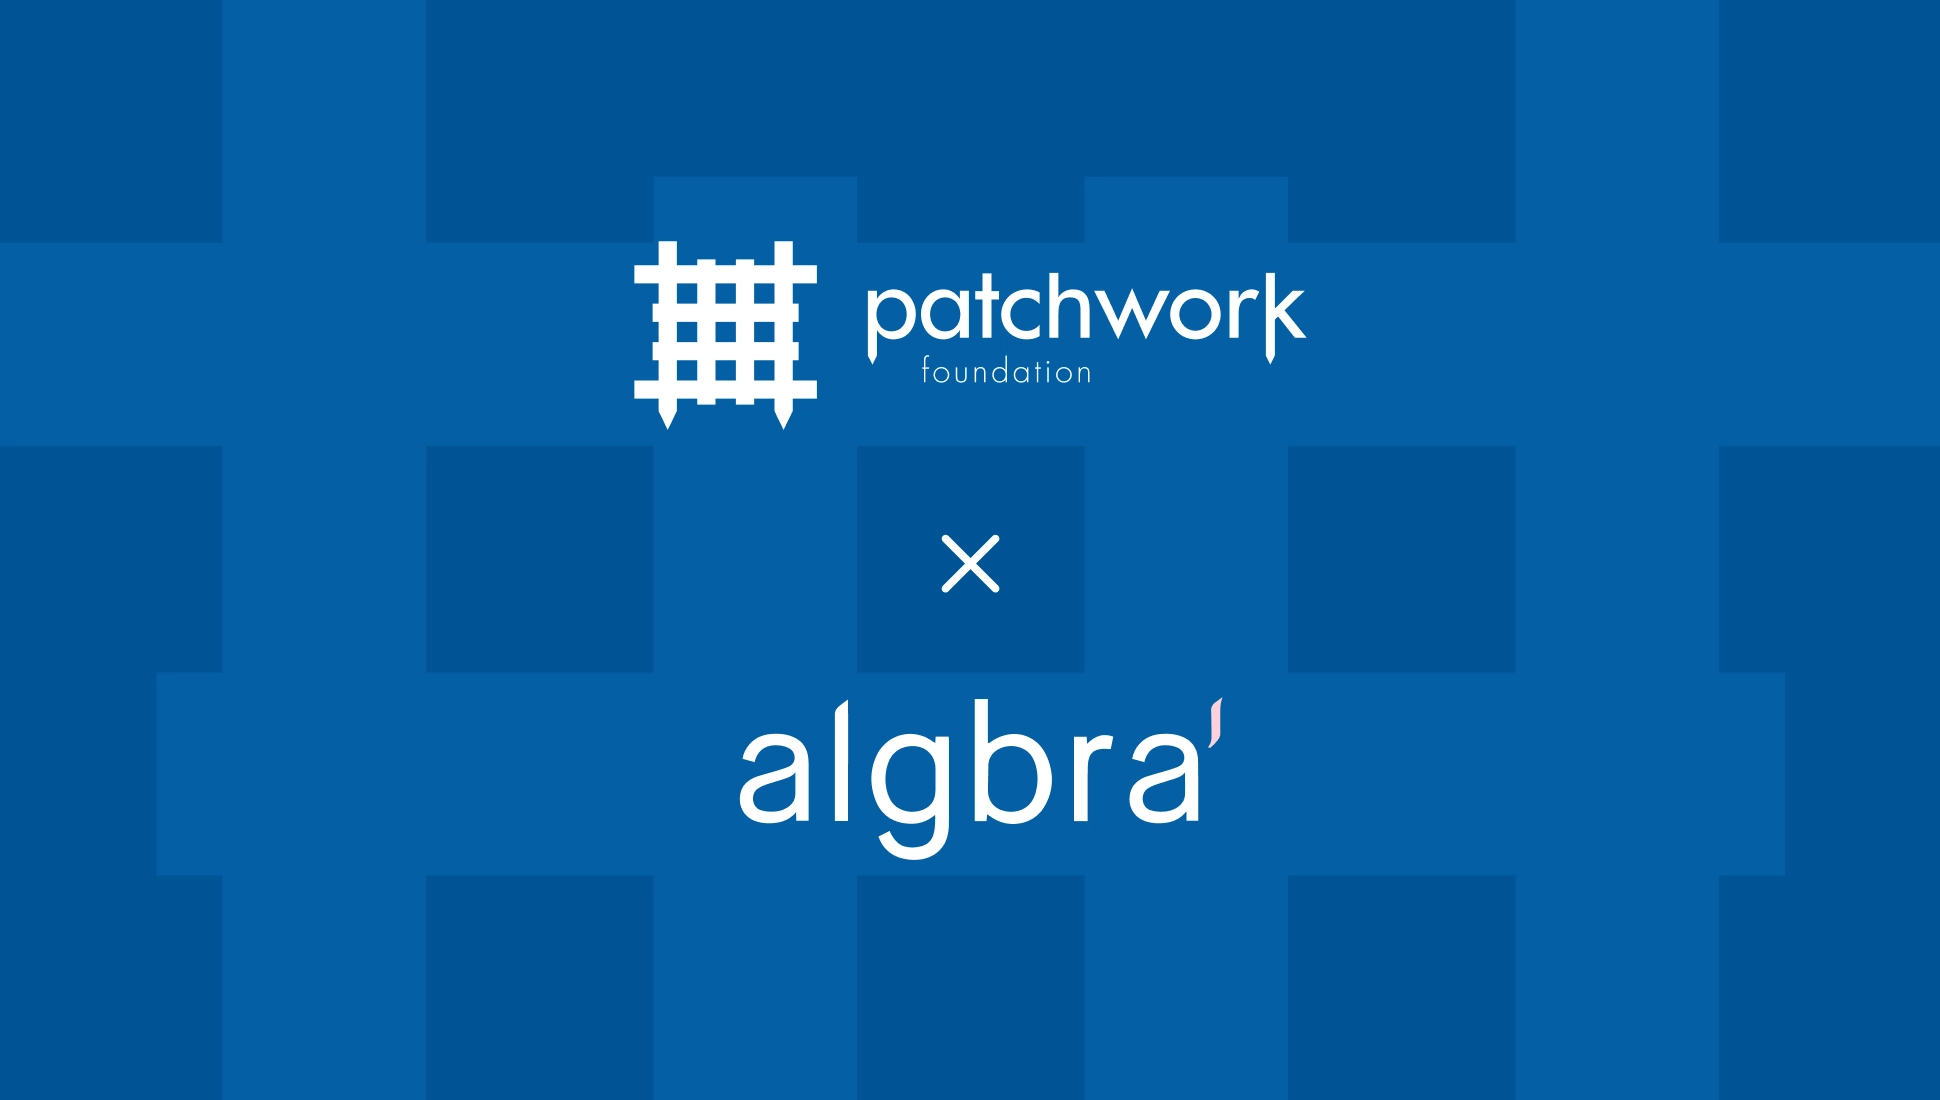 Algbra Announces Partnership with the Patchwork Foundation